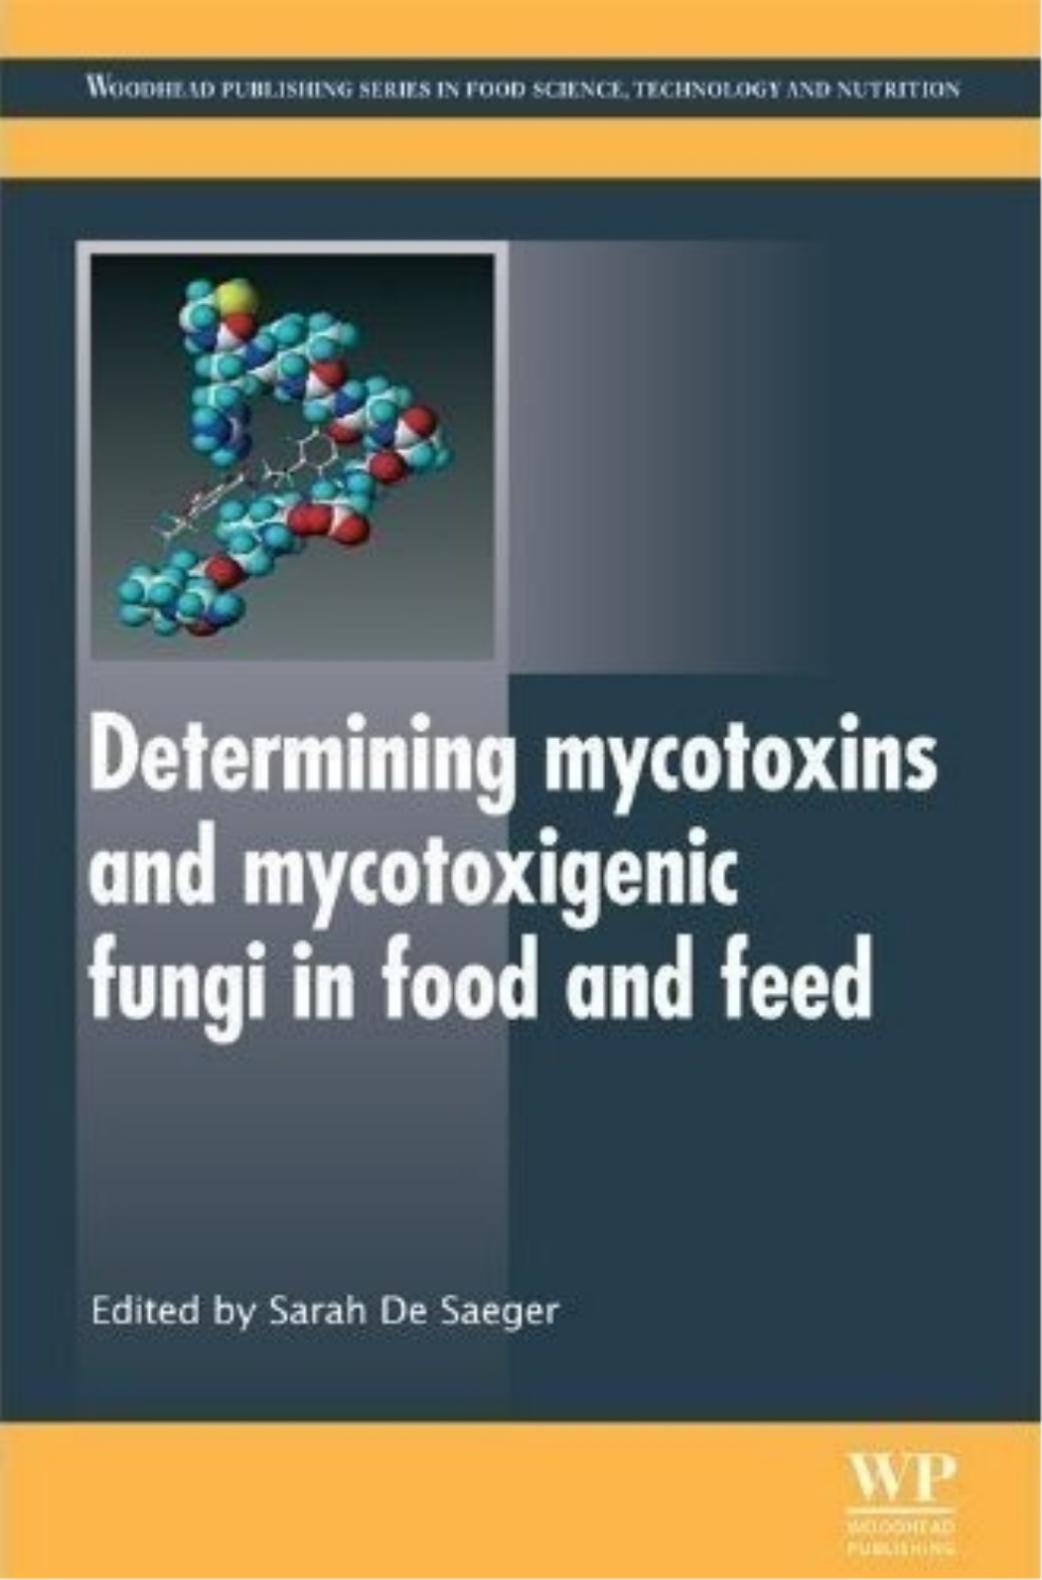 Mycotoxinsprel.pmd